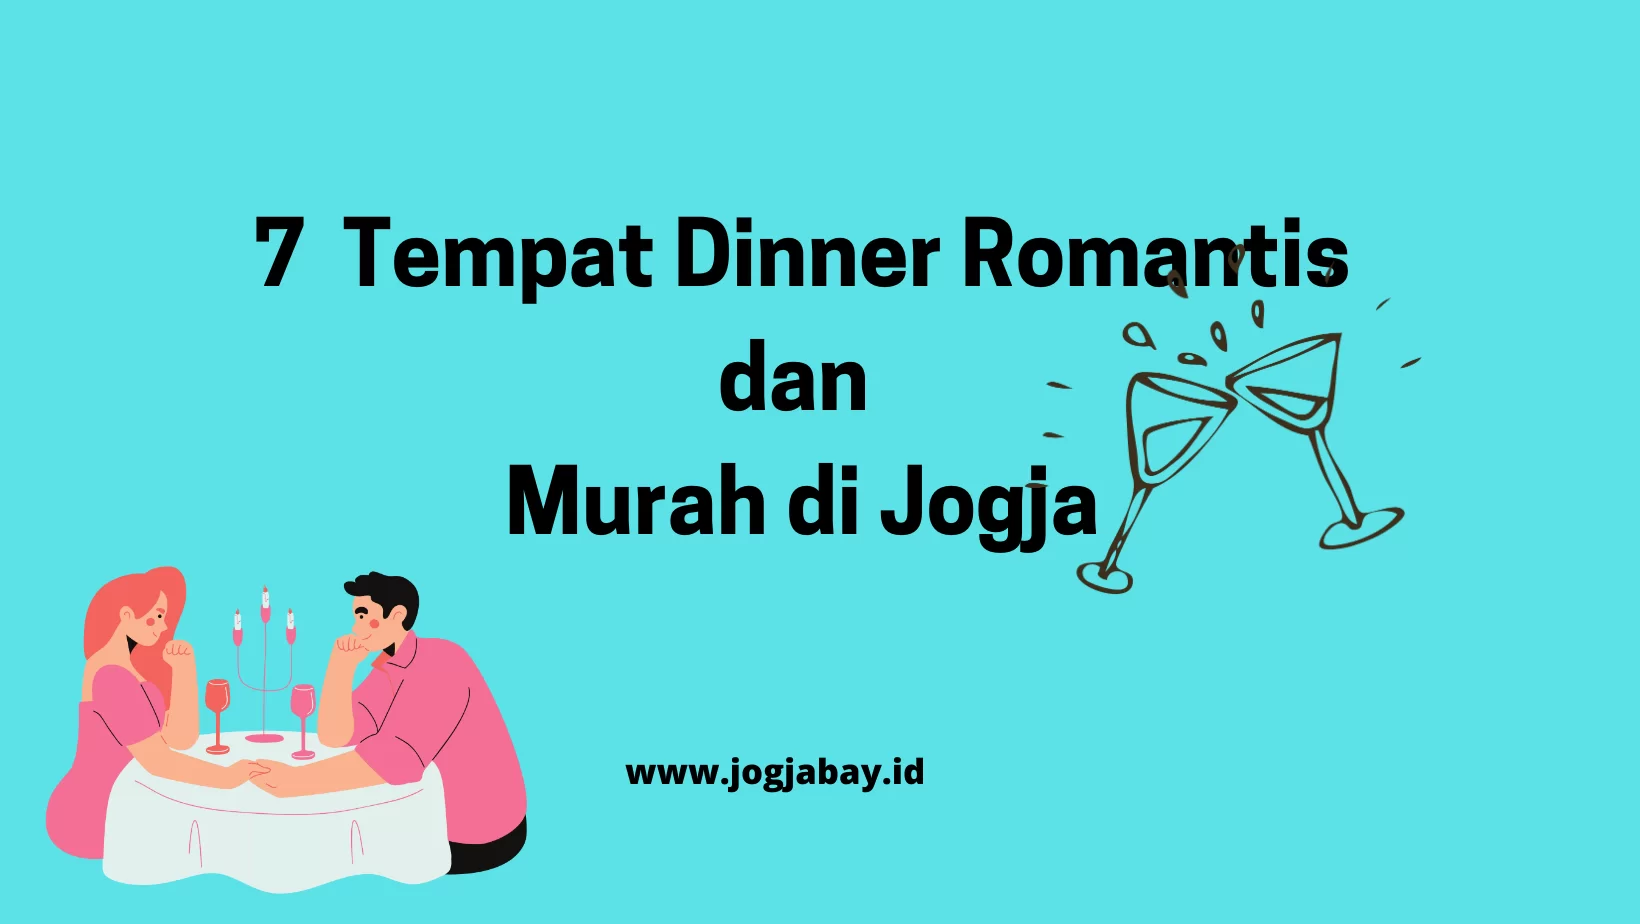 Tempat Dinner Romantis dan Murah di Jogja